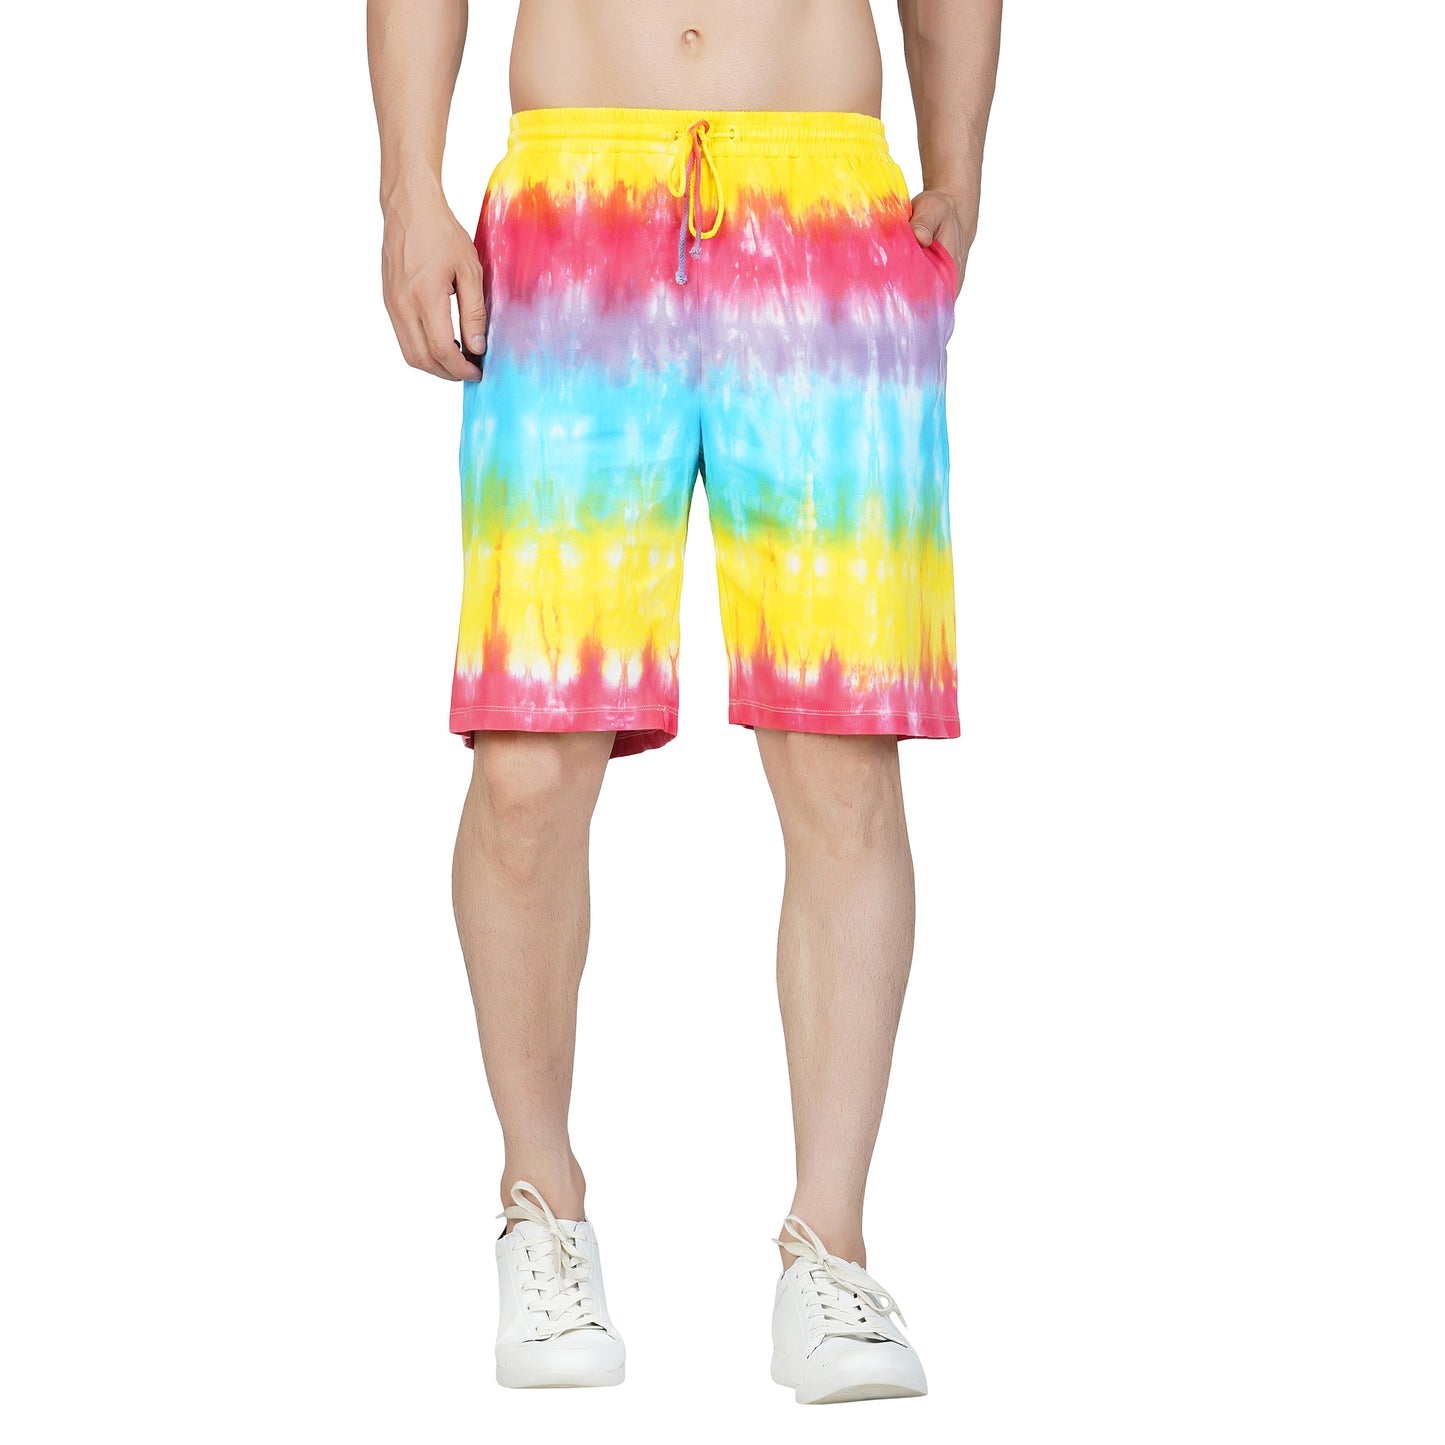 SLAY. Men's Rainbow Tie Dye T shirt & Shorts Co-ord Set